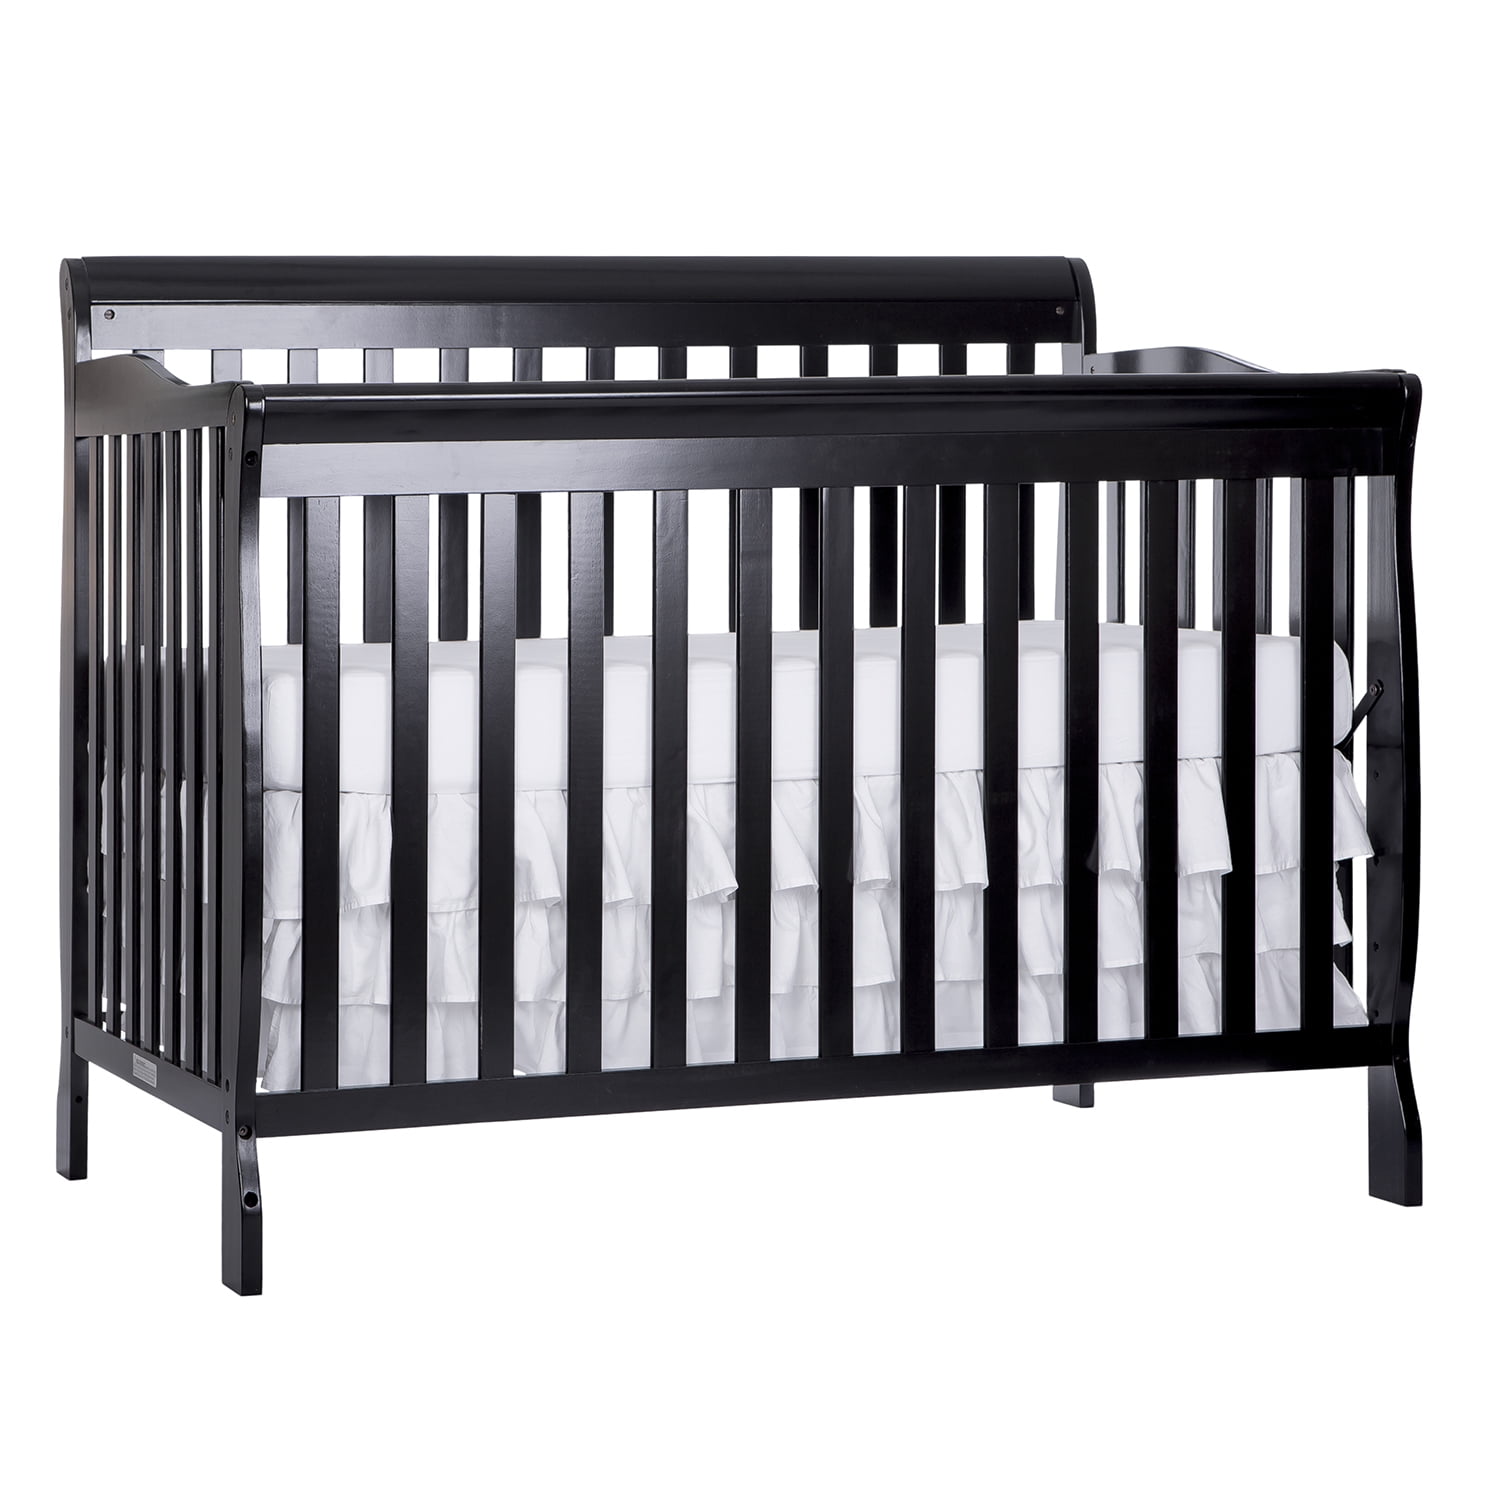 5 in 1 baby crib